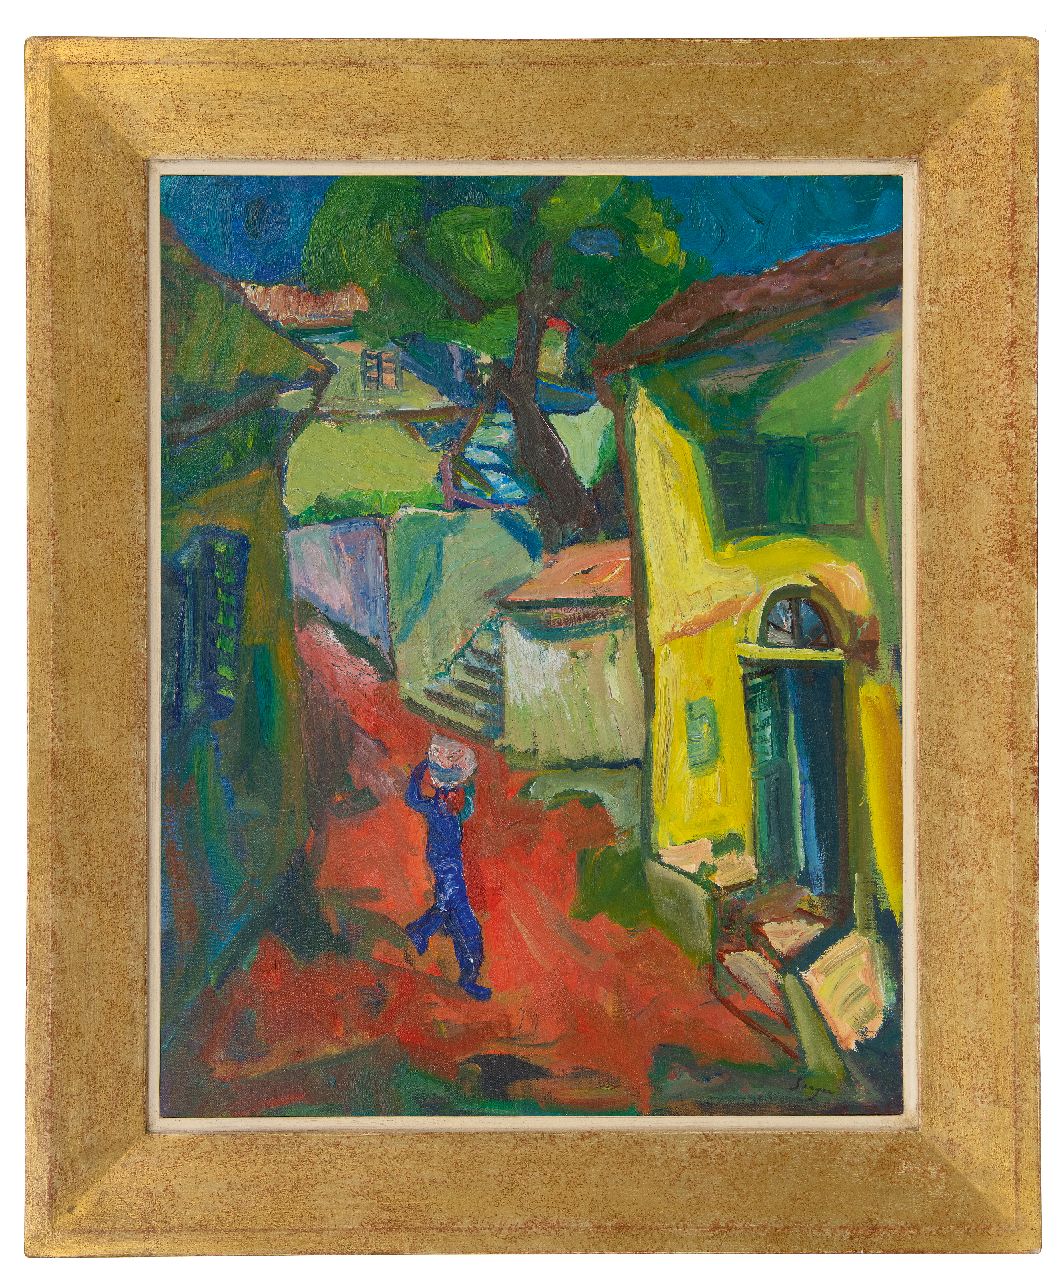 Serger F.B.  | Frederick Bedrich Serger, Mediterraans dorpje, olieverf op doek 71,4 x 56,0 cm, gesigneerd rechtsonder